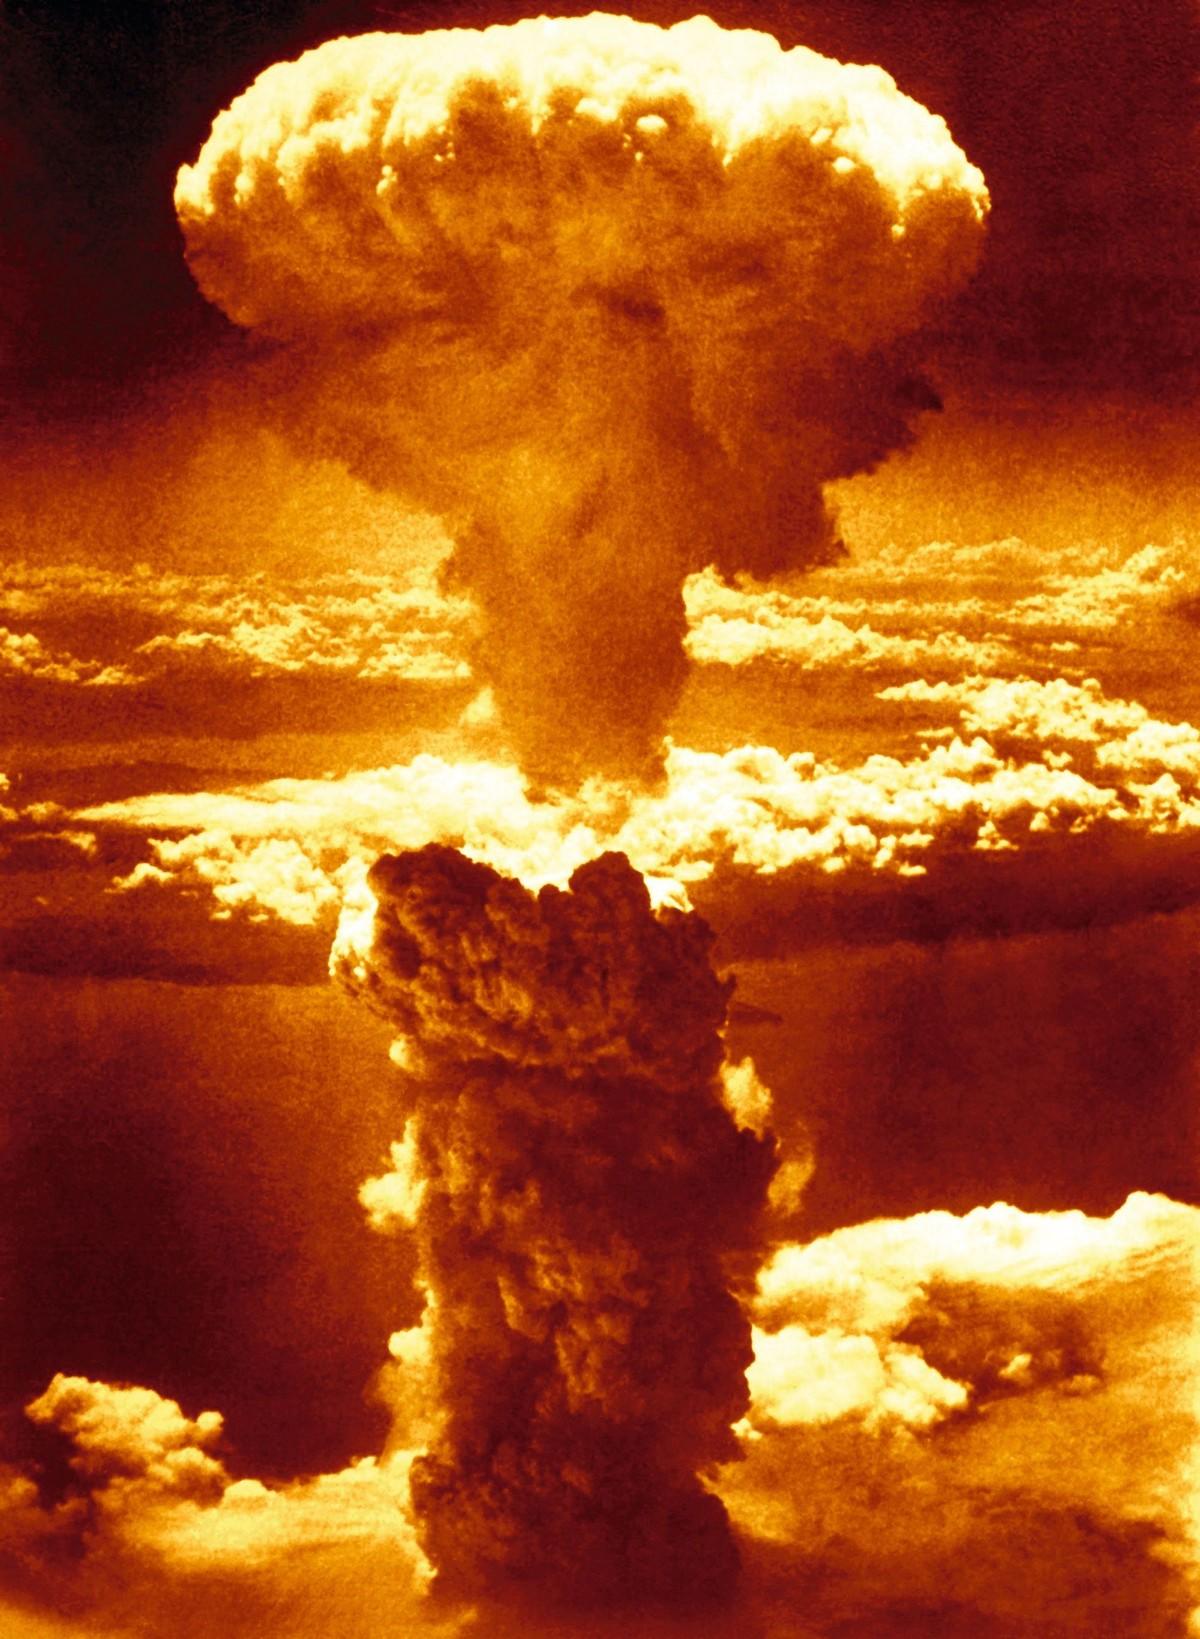 Contexte Chapitre 3 - Explosion atomique de Nagasaki 9 août 1945